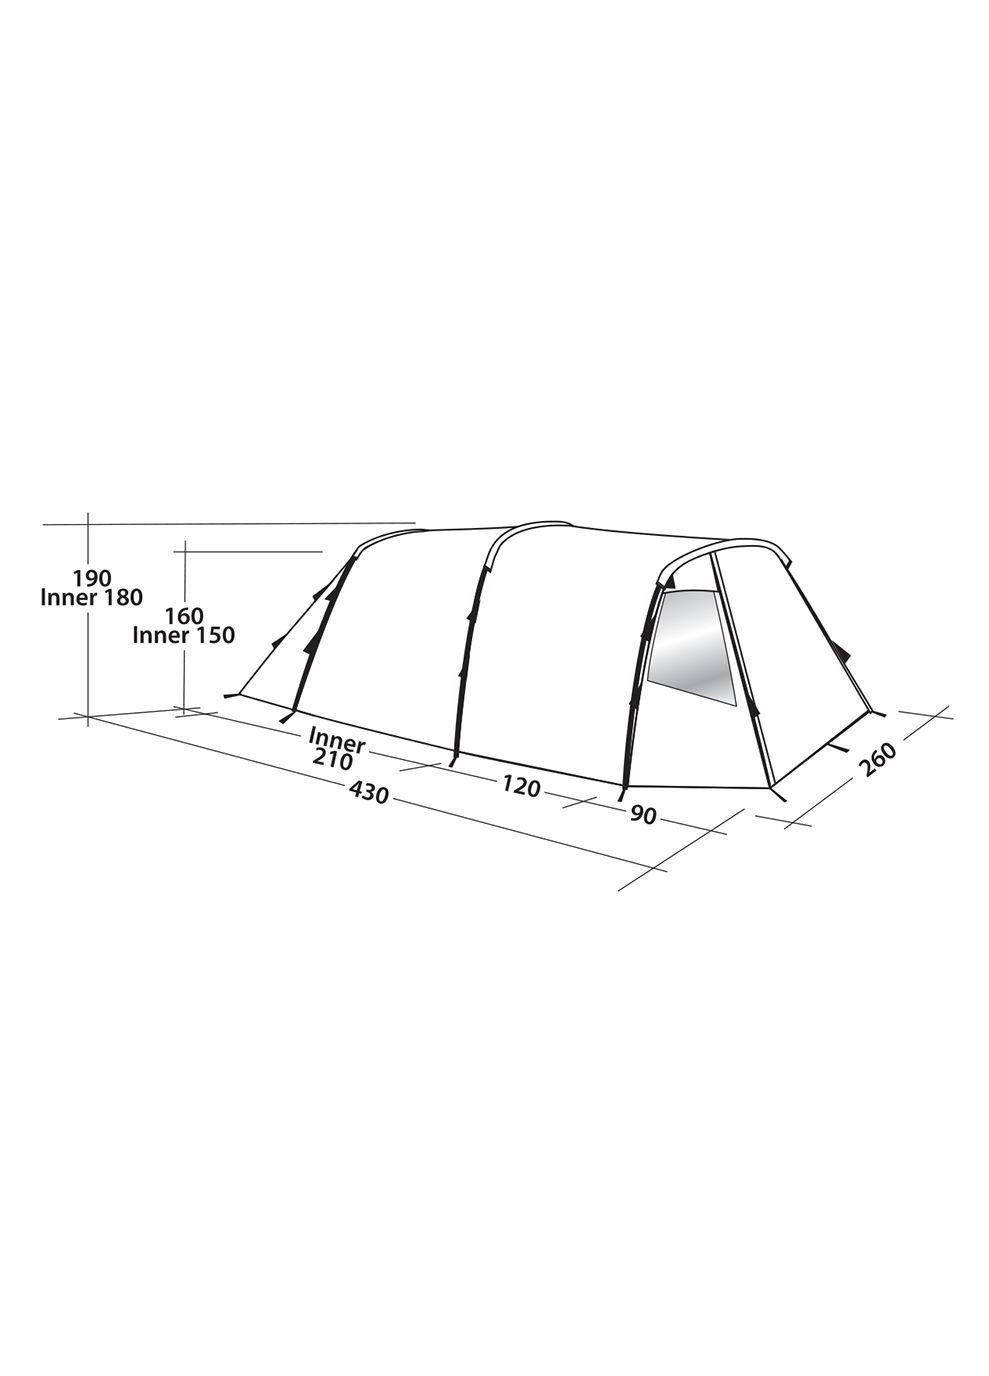 Палатка четырехместная Huntsville 400 Green/Grey Easy Camp (282616180)